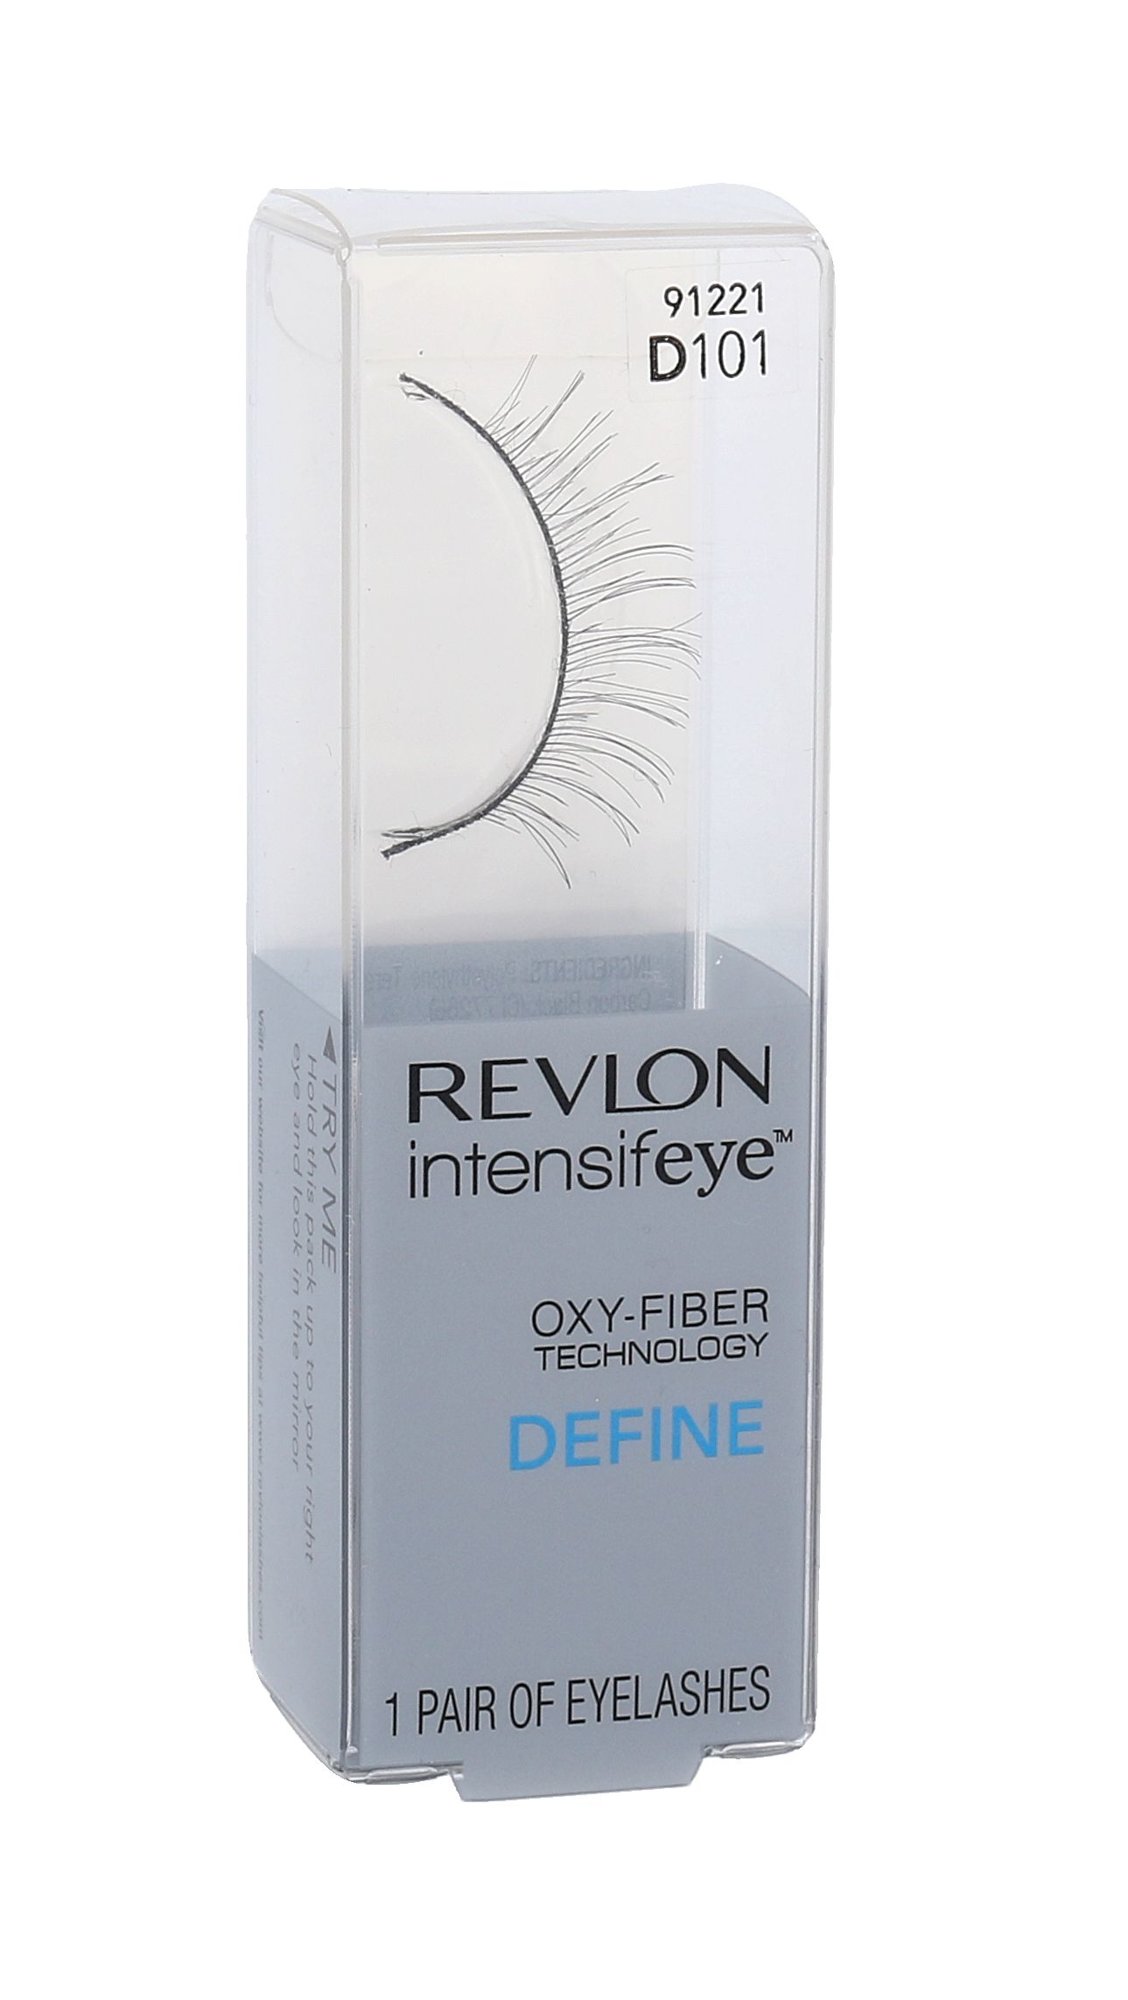 Revlon Define Intensifeye Oxy-Fiber Technology dirbtinės blakstienos